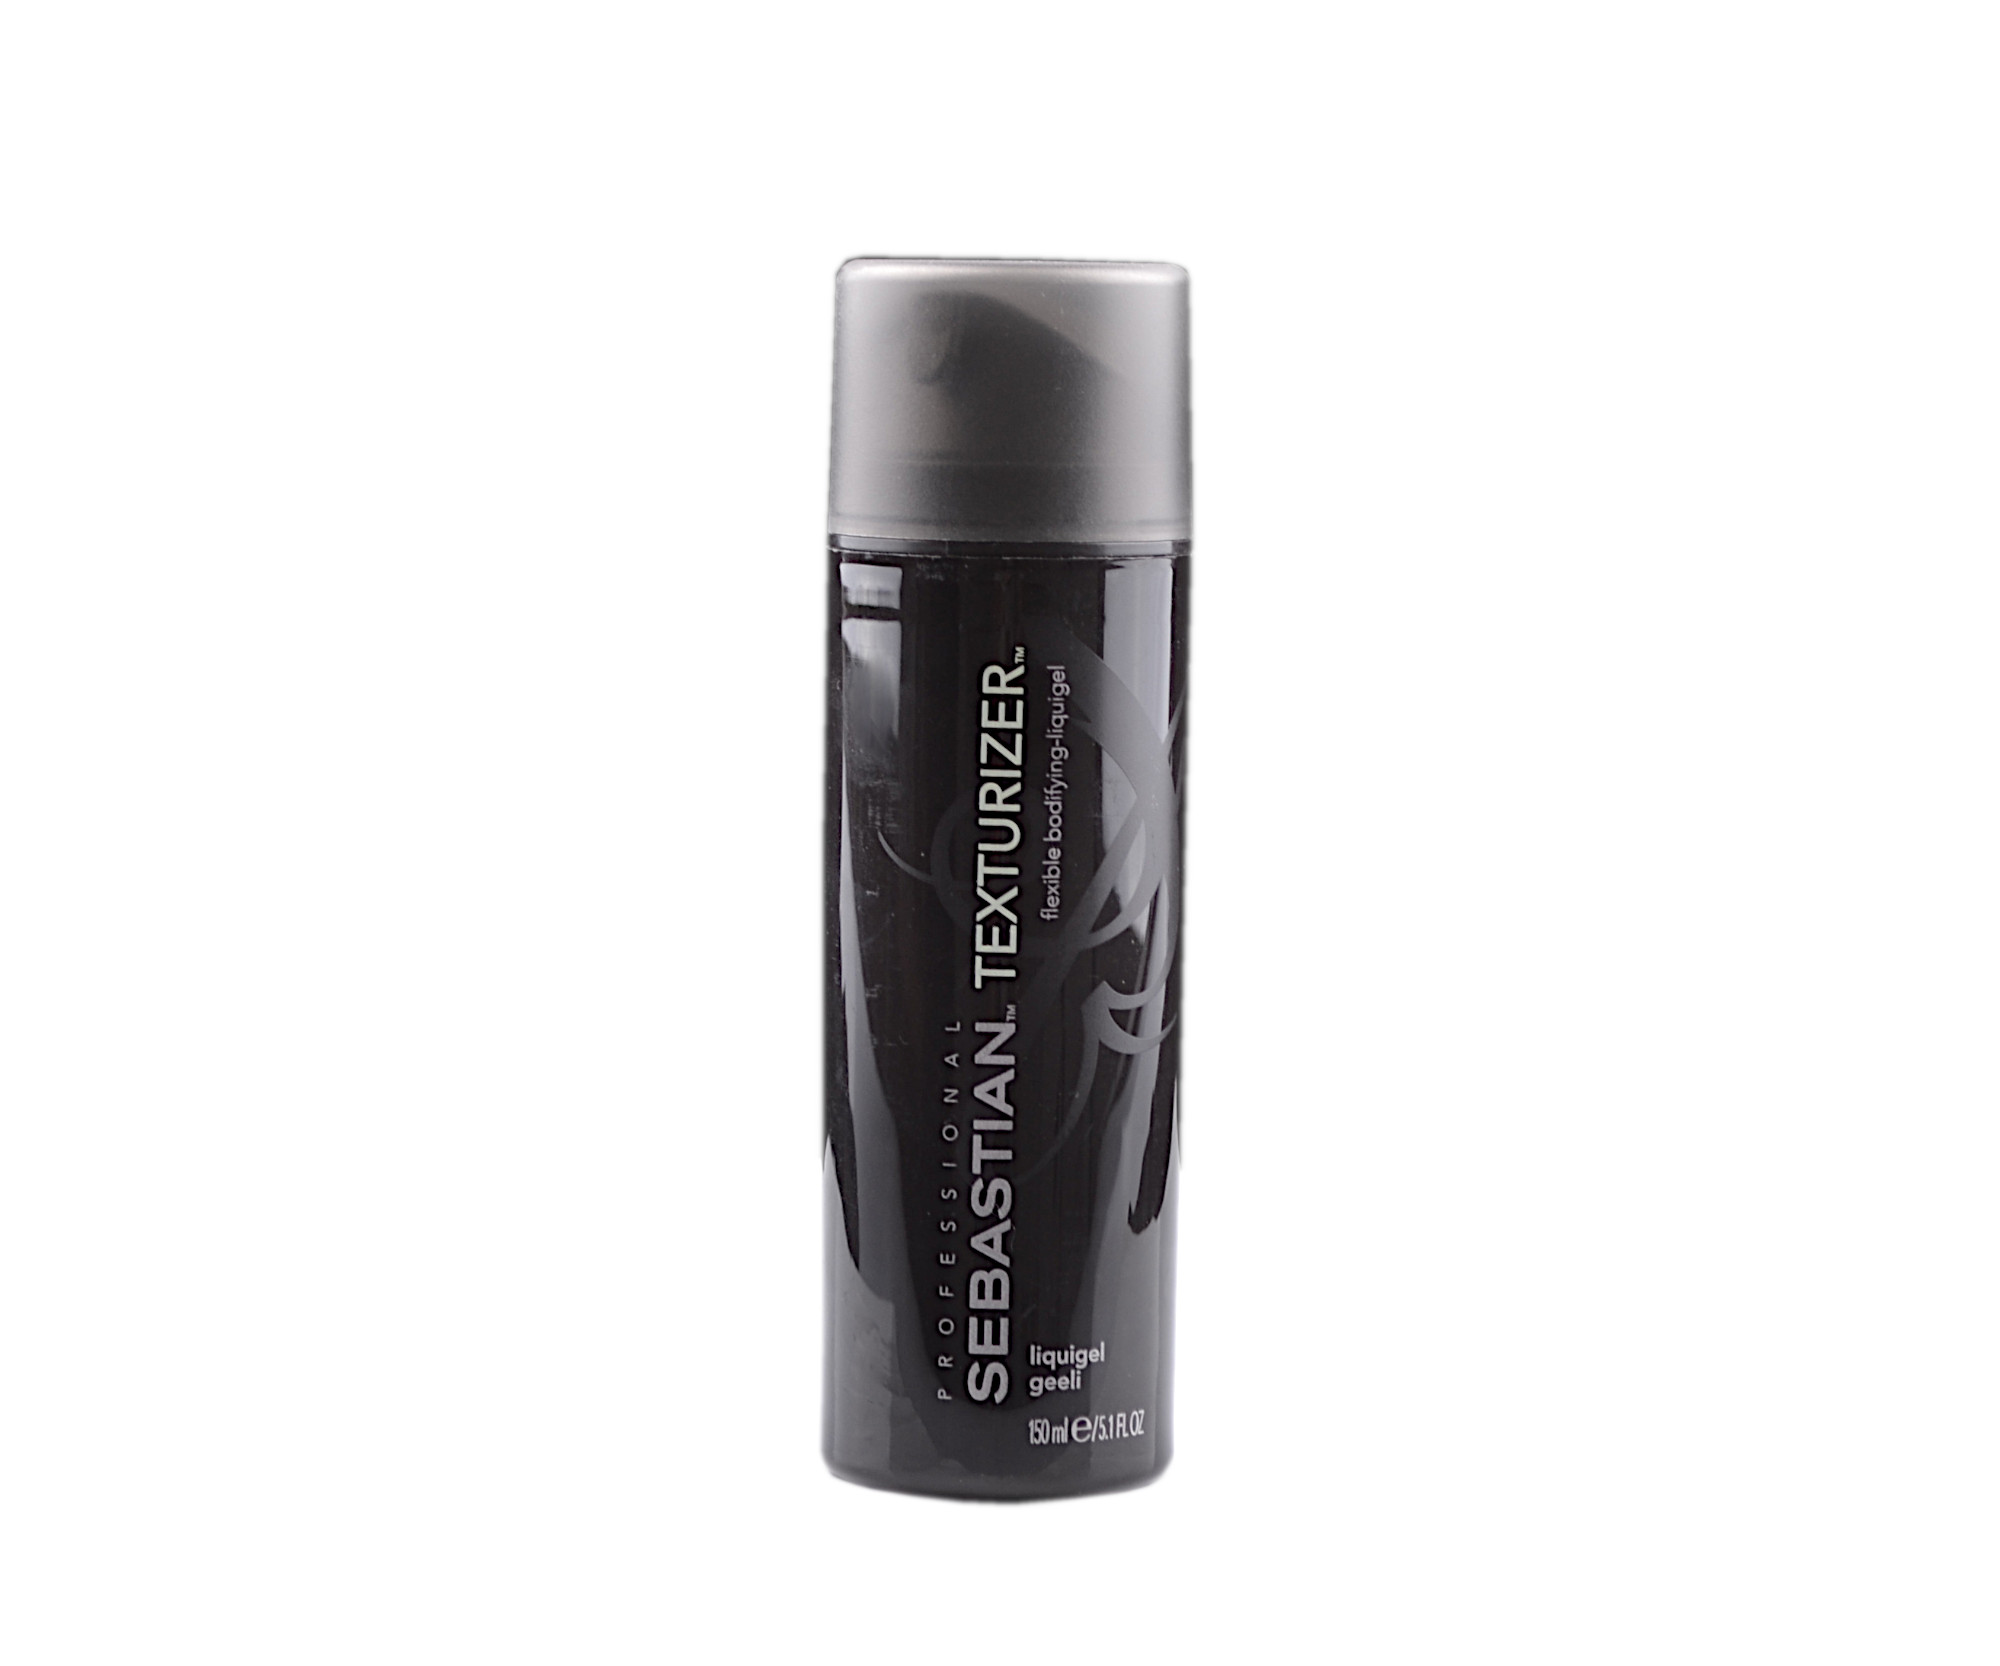 Flexibilní tekutý gel pro objem vlasů Sebastian Professional Texturizer Liquid Gel - 150 ml (81387930) + DÁREK ZDARMA